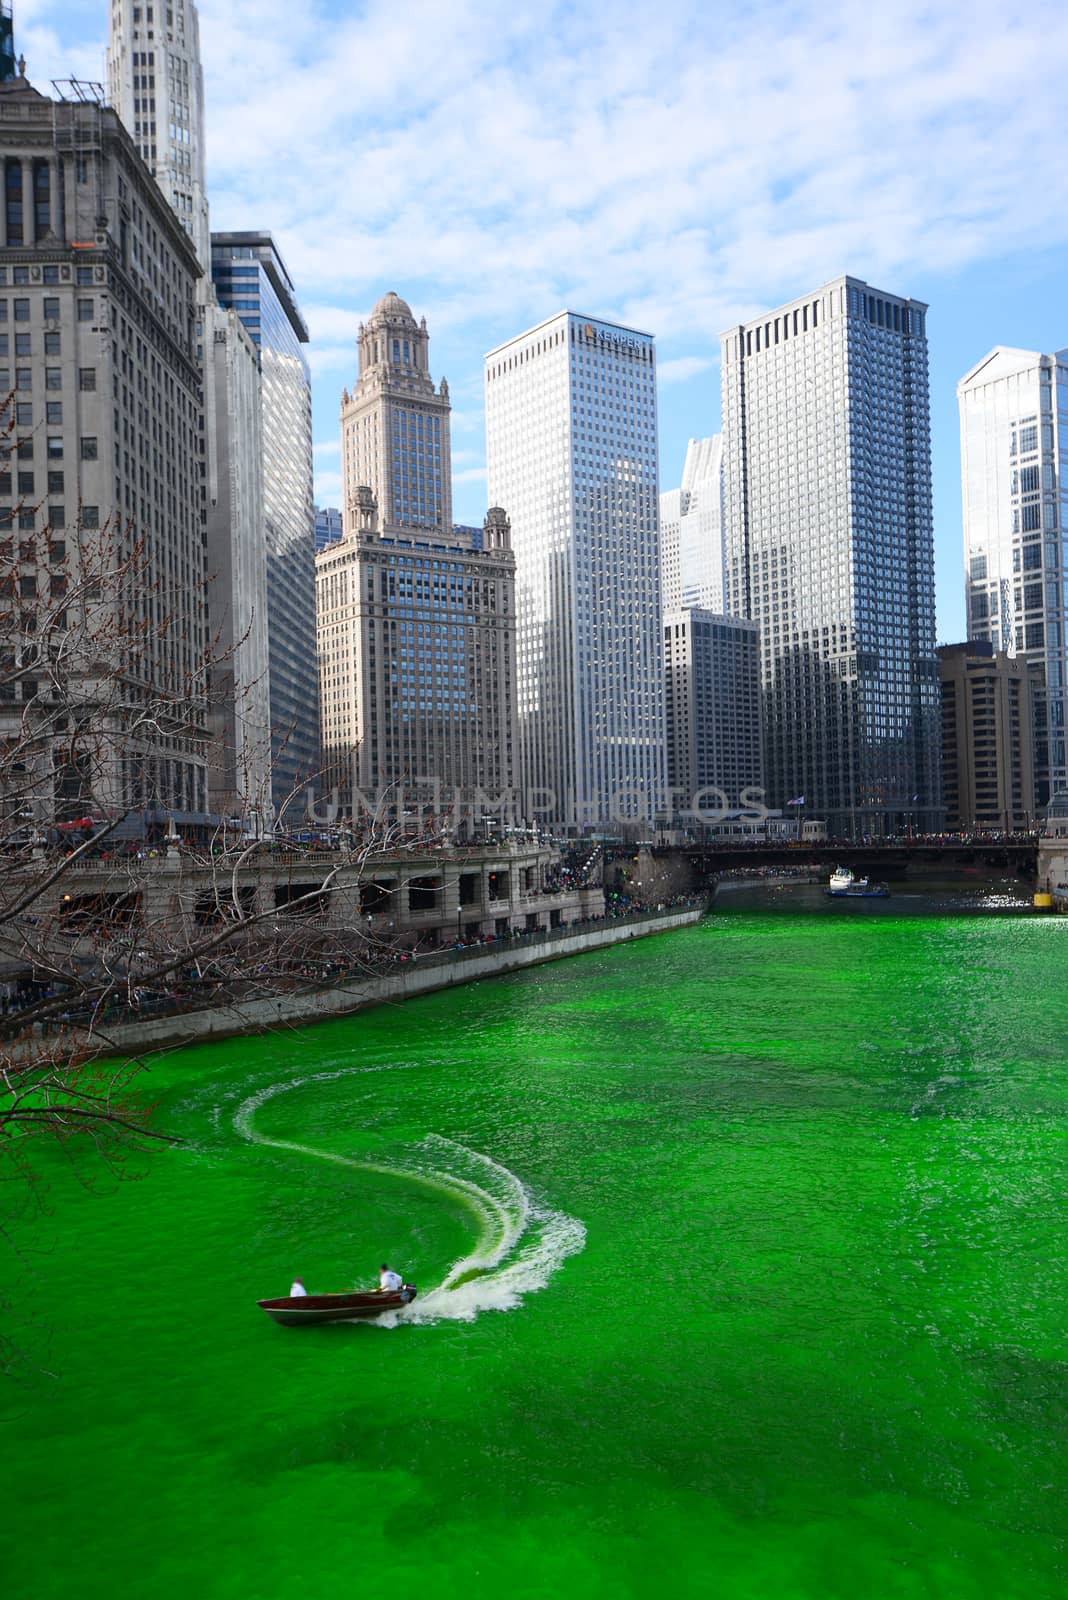 chicago green river by porbital